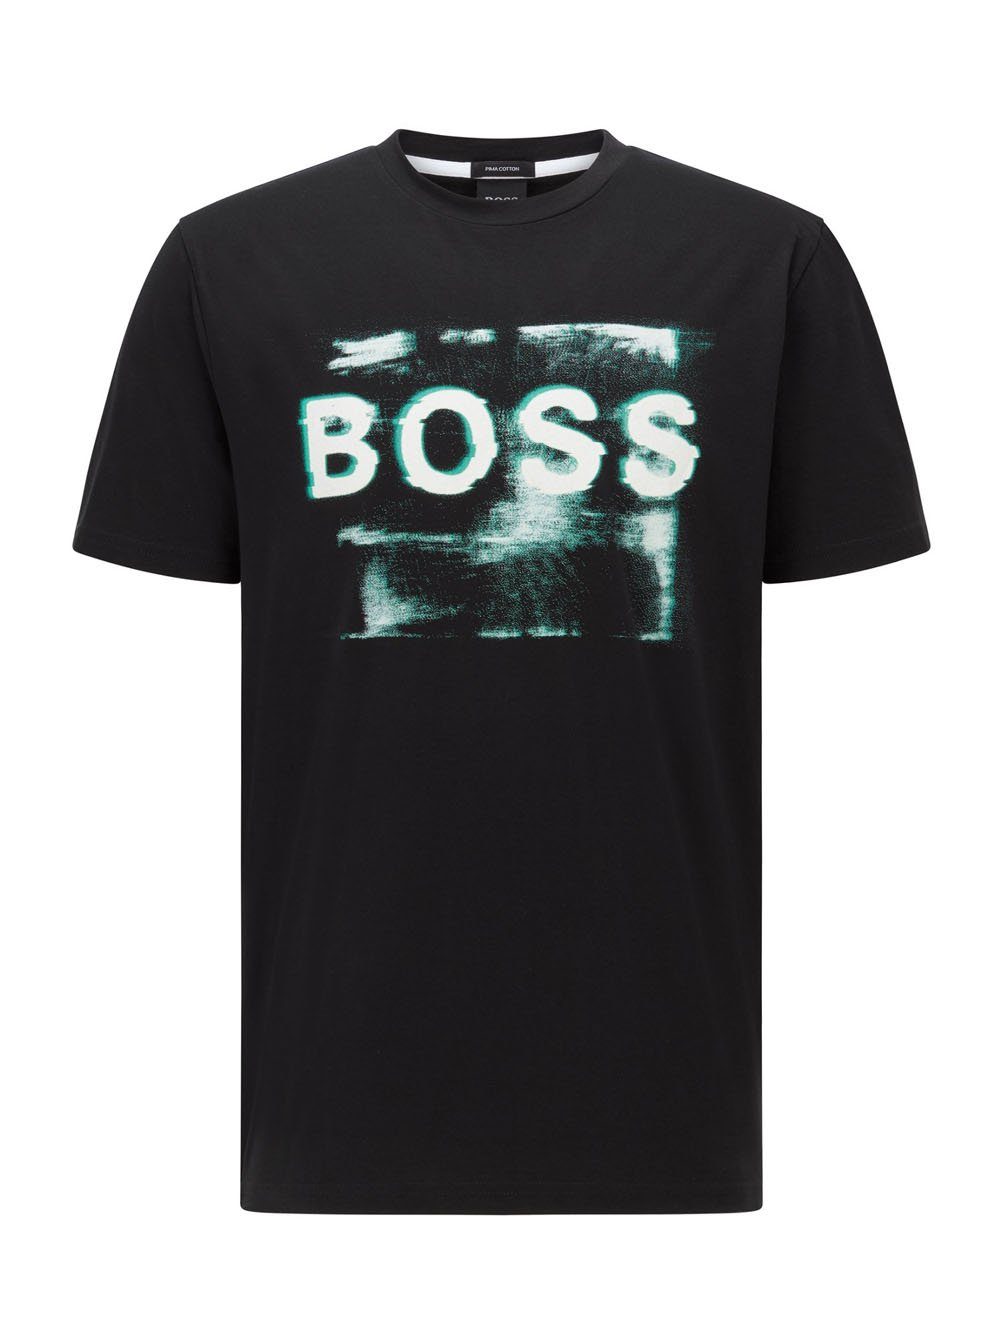 BOSS Mixed Print Logo T shirt Black - MAISONDEFASHION.COM